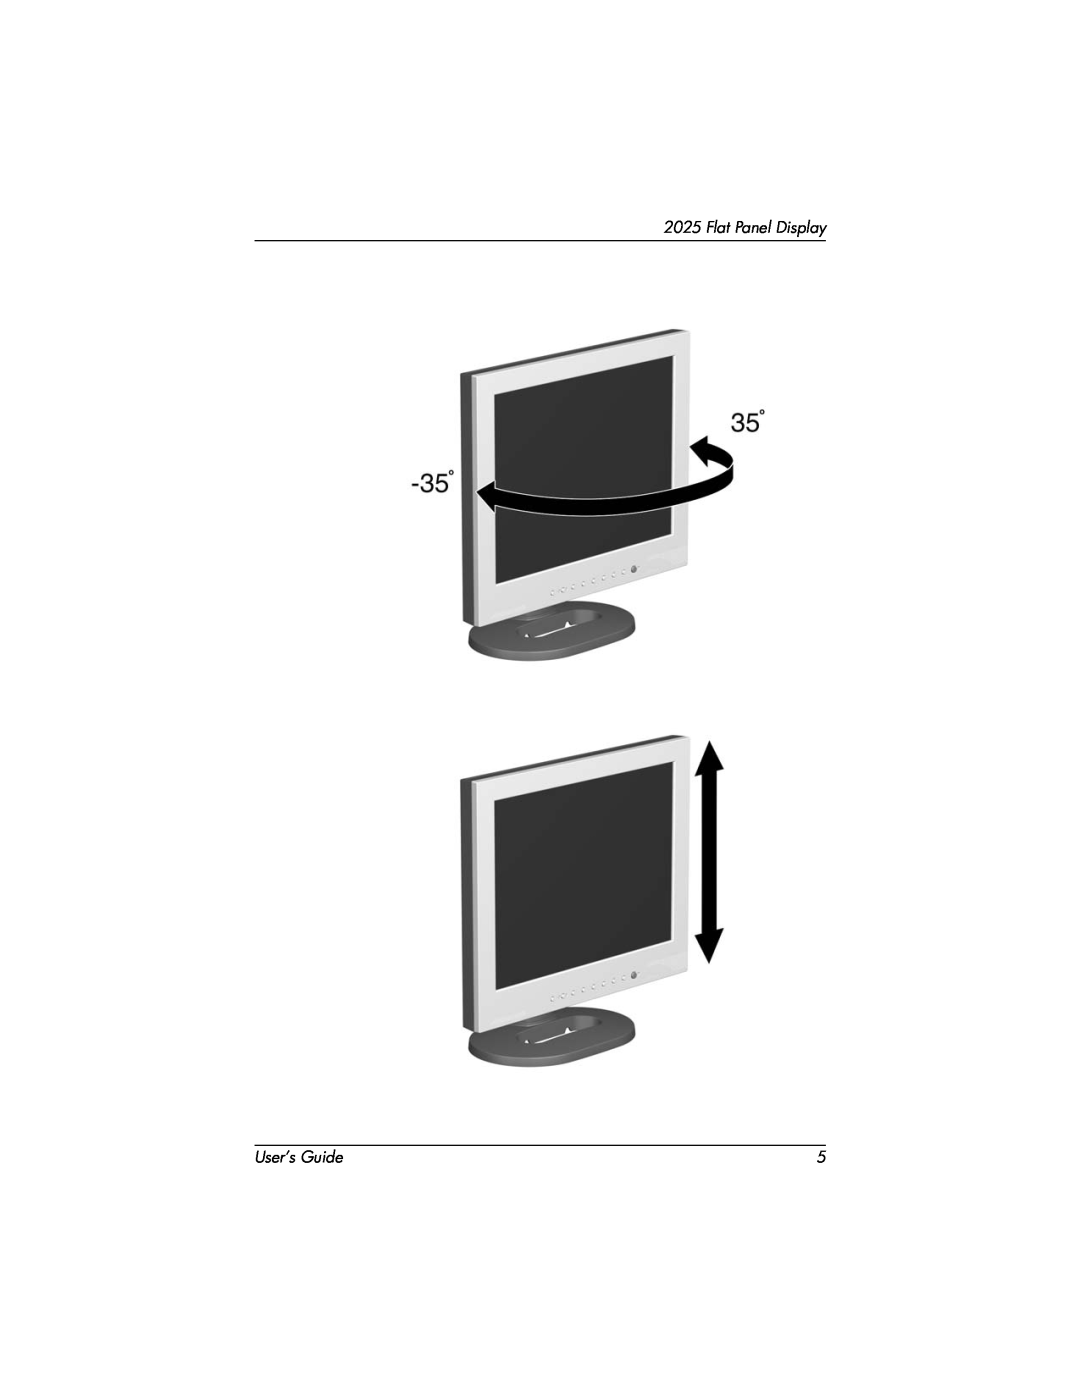 Compaq 2025 manual Flat Panel Display, User’s Guide 